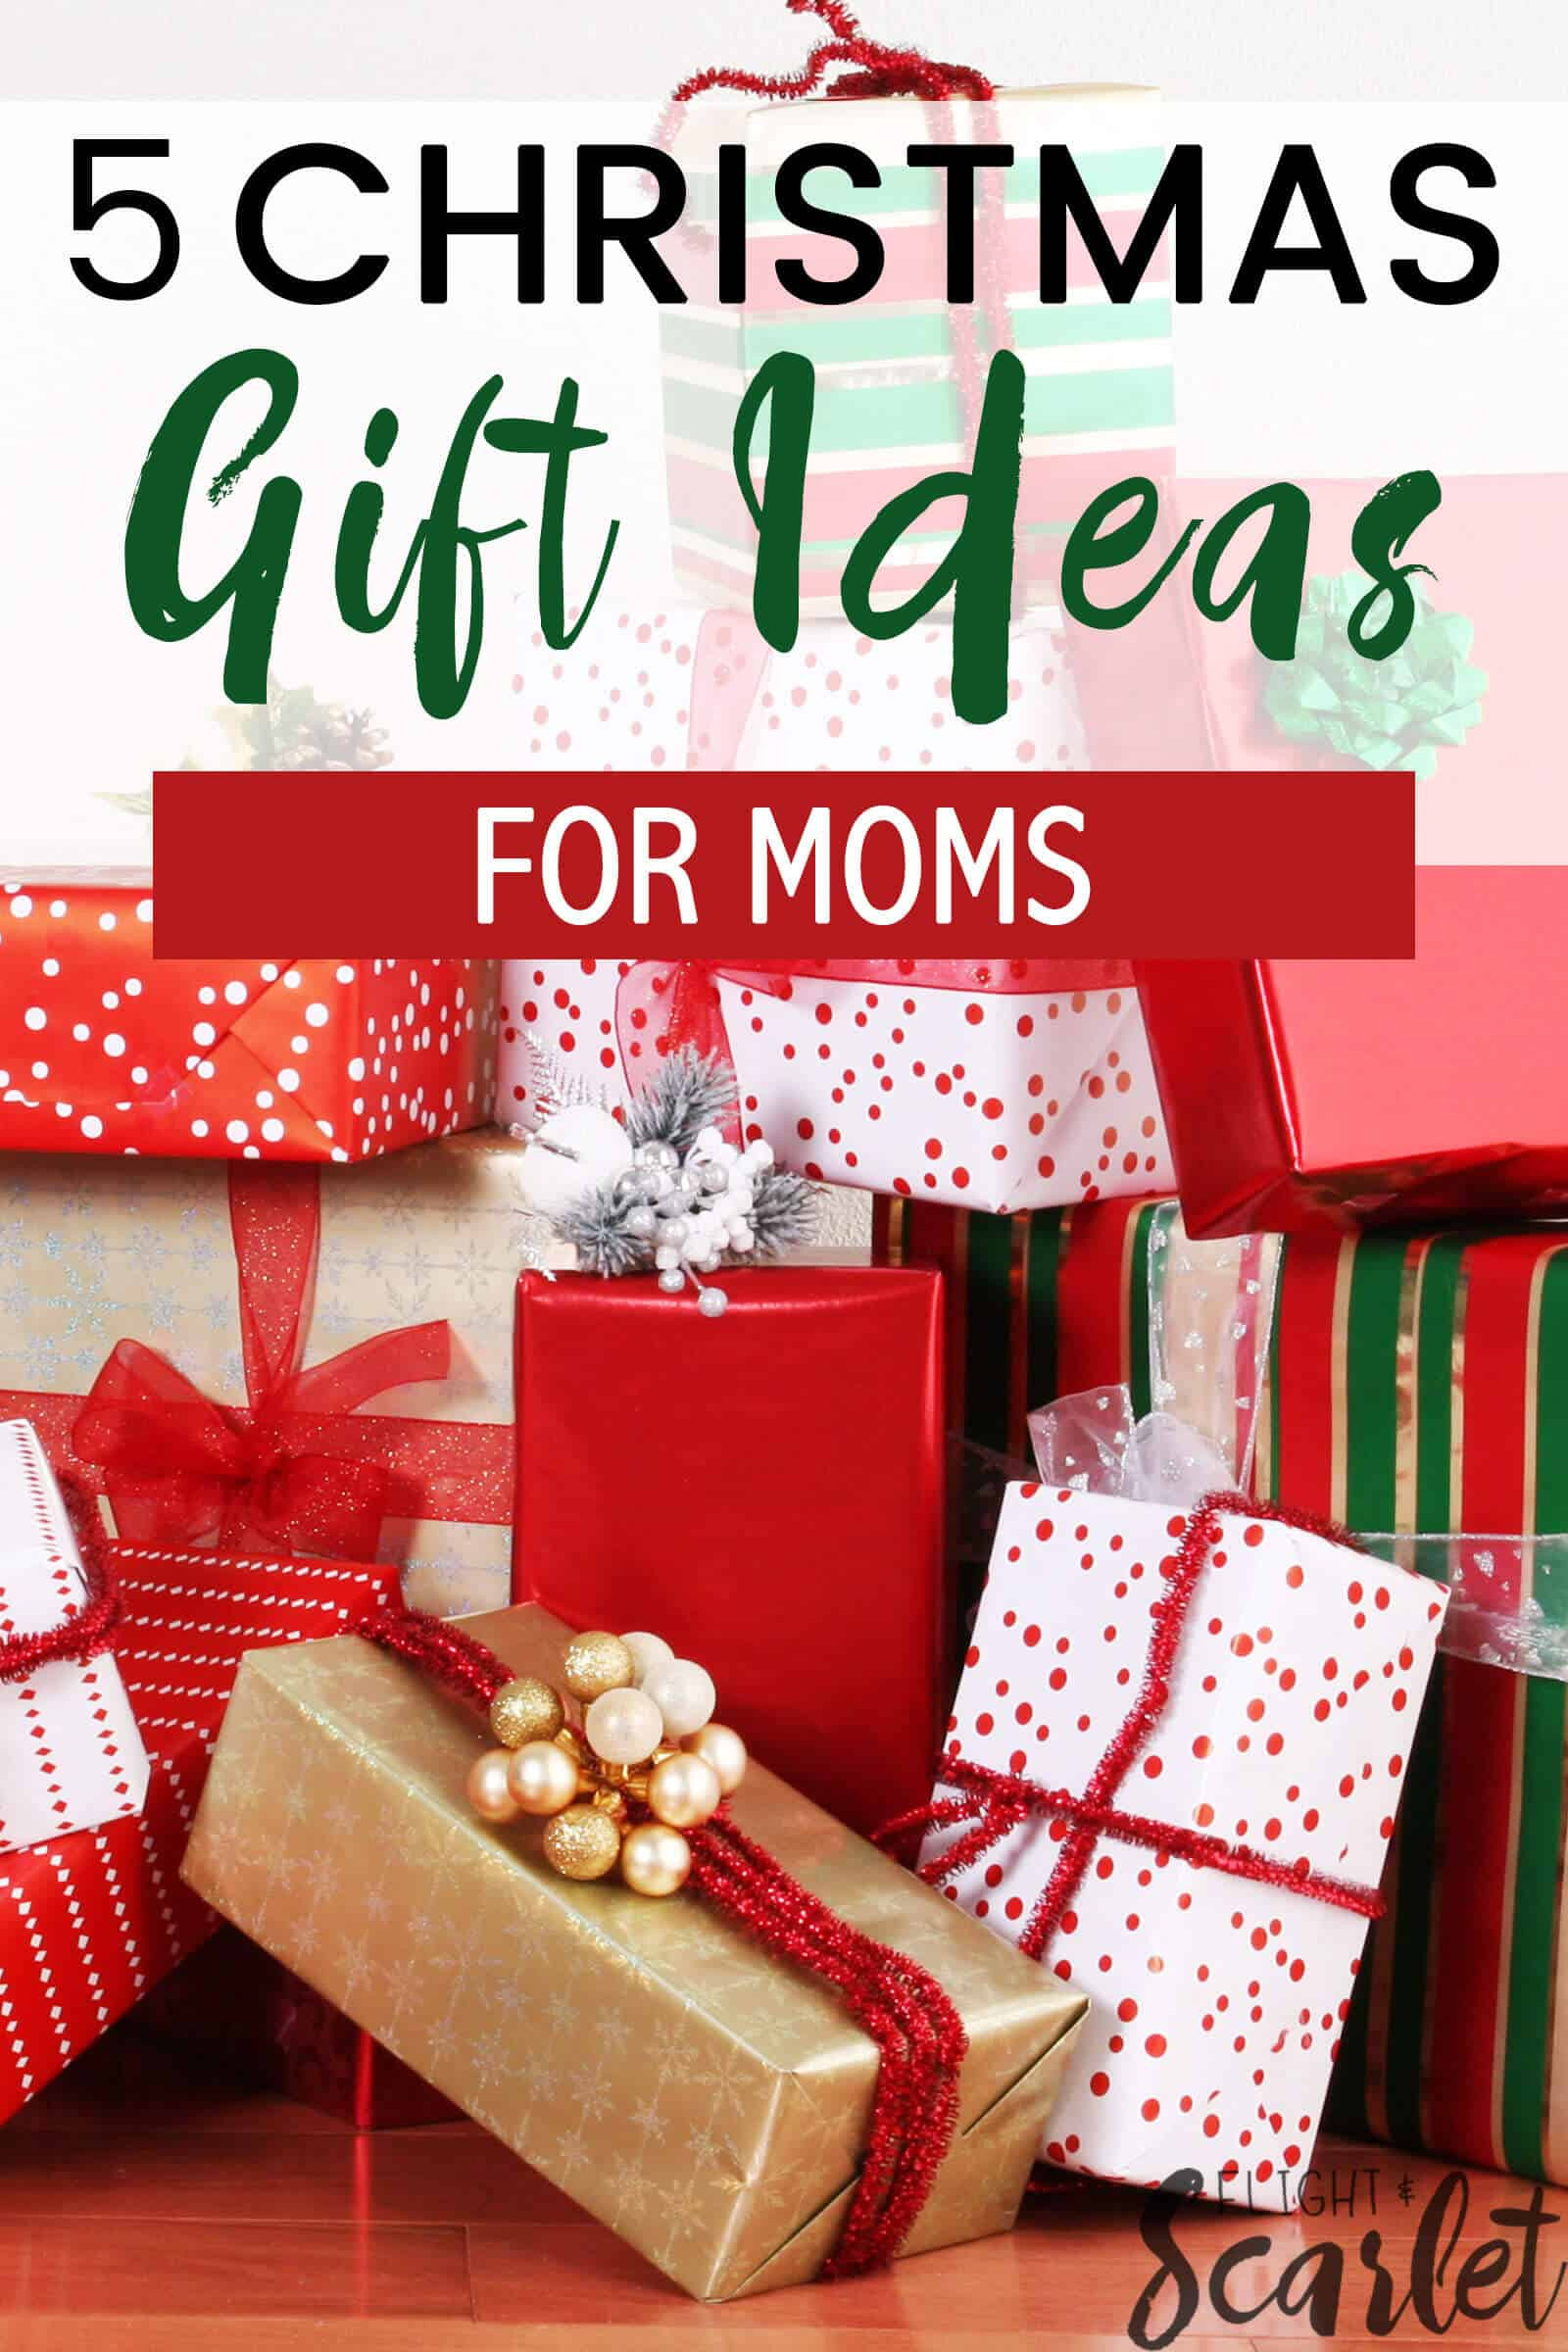 Gift Ideas For Mom Christmas
 5 Bud Friendly Gift Ideas For Moms Flight & Scarlet